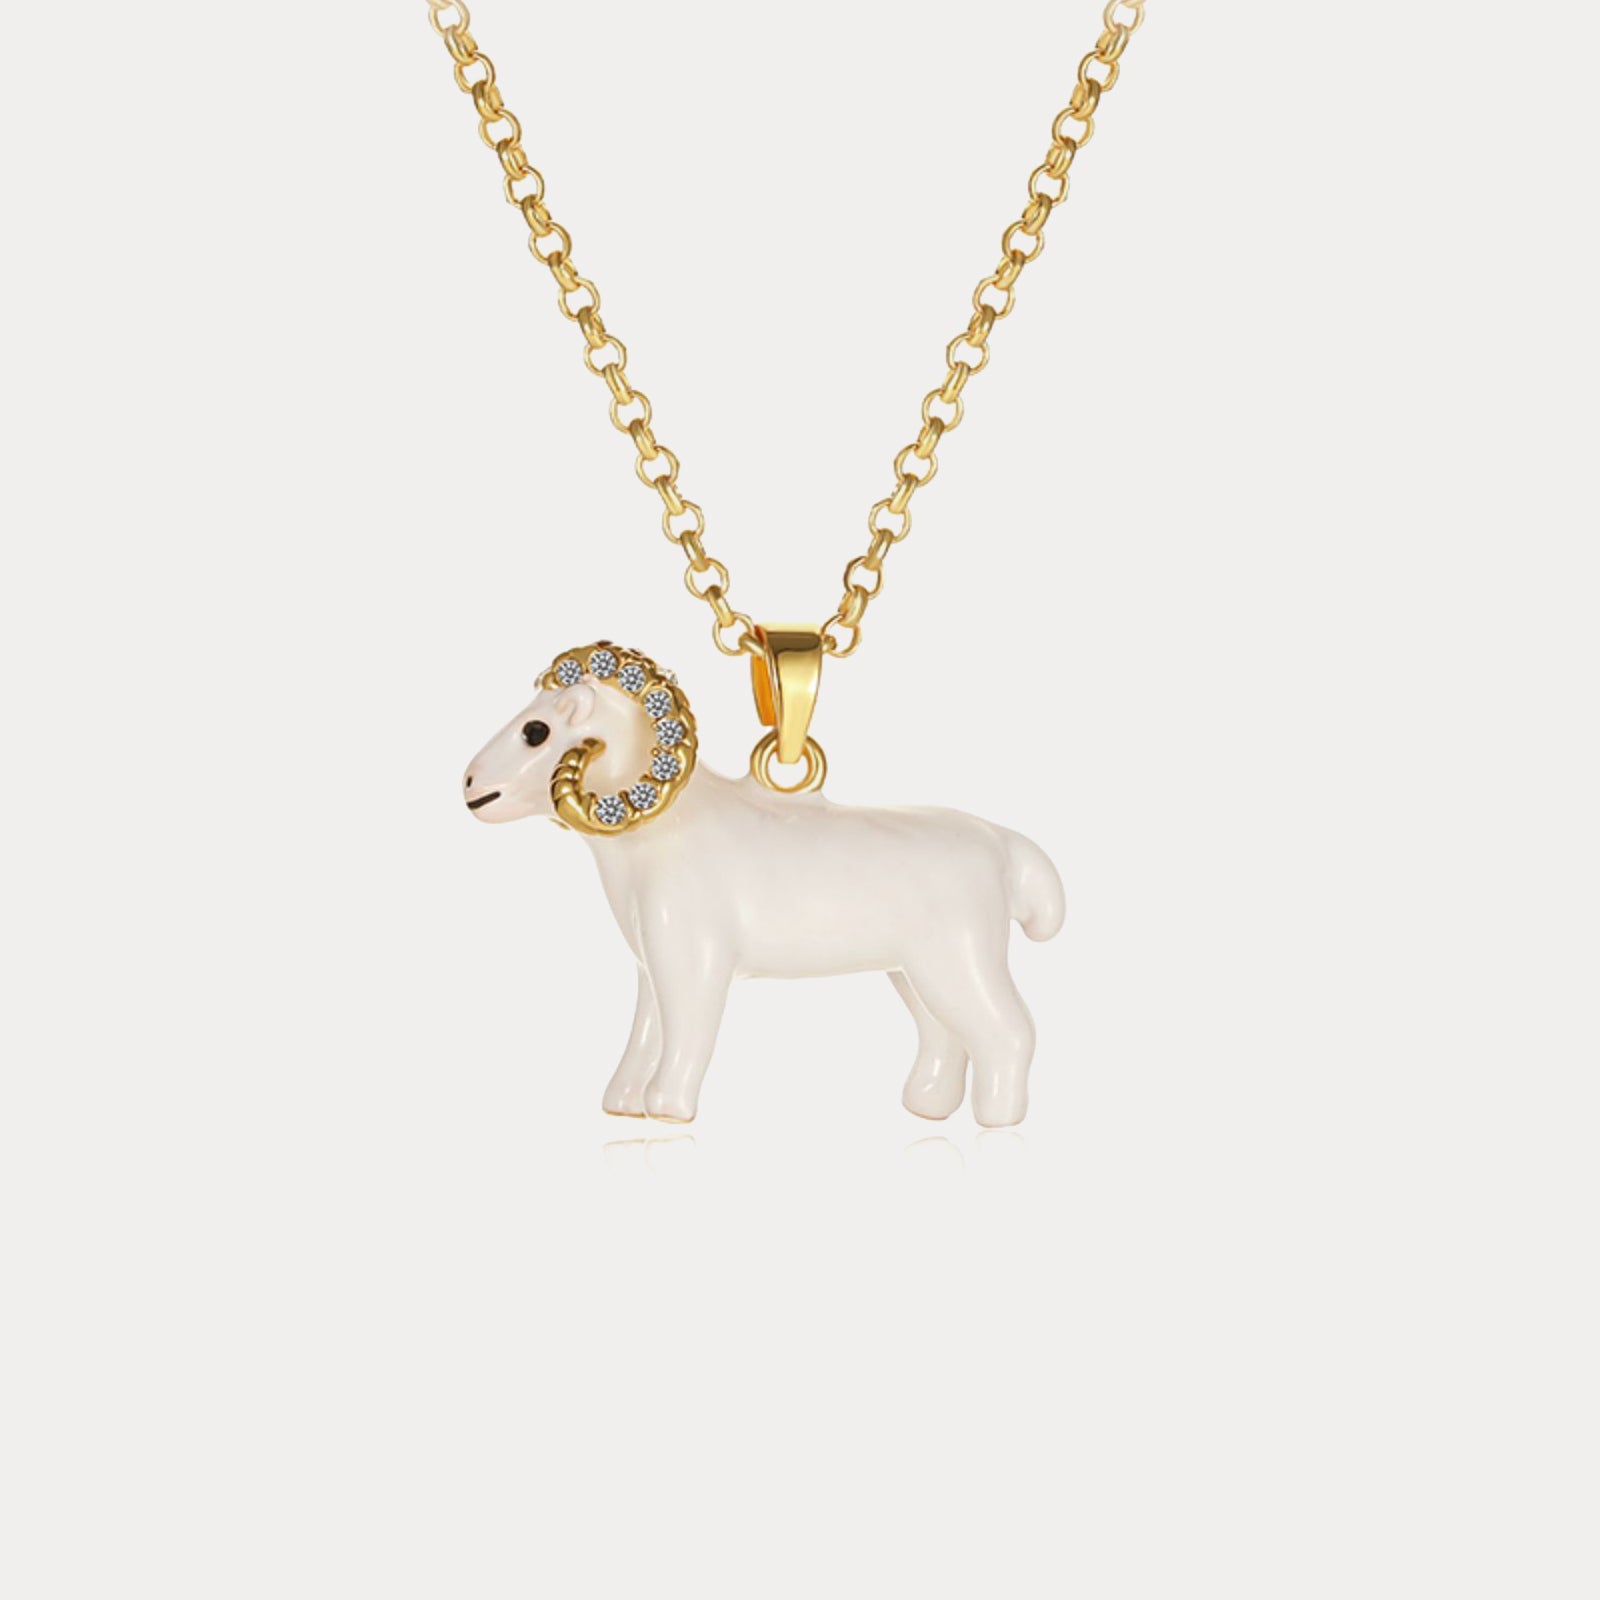 Selenichast goat necklace